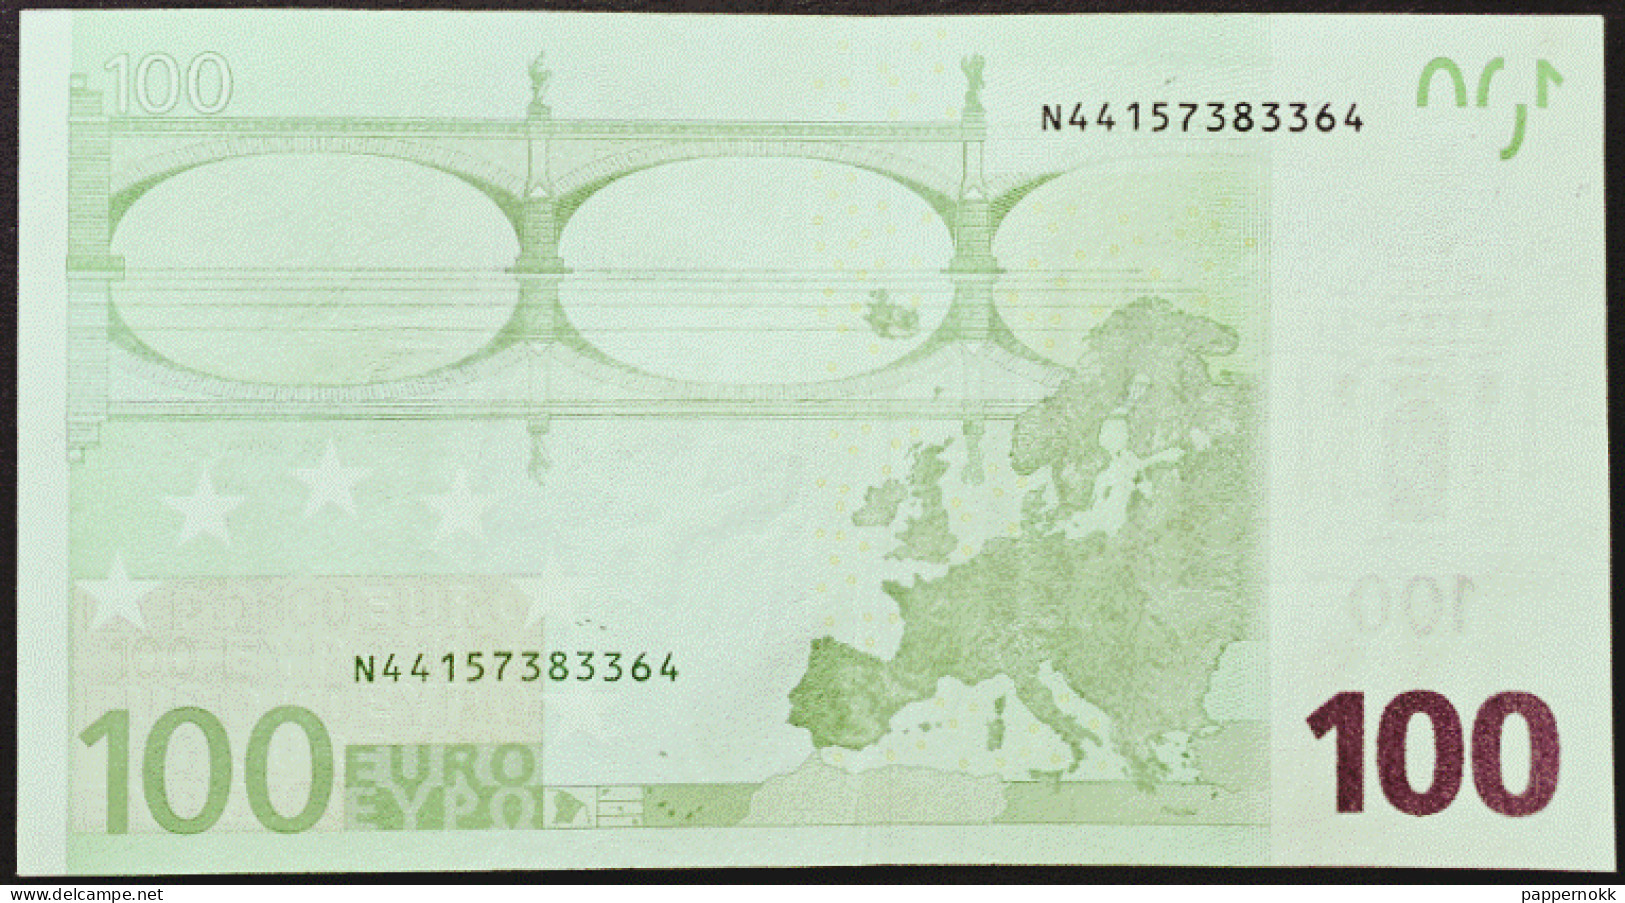 100 Euro 1° Serie Italia  F007 D4 - N4415...  SUP+/UNC  Draghi - 100 Euro